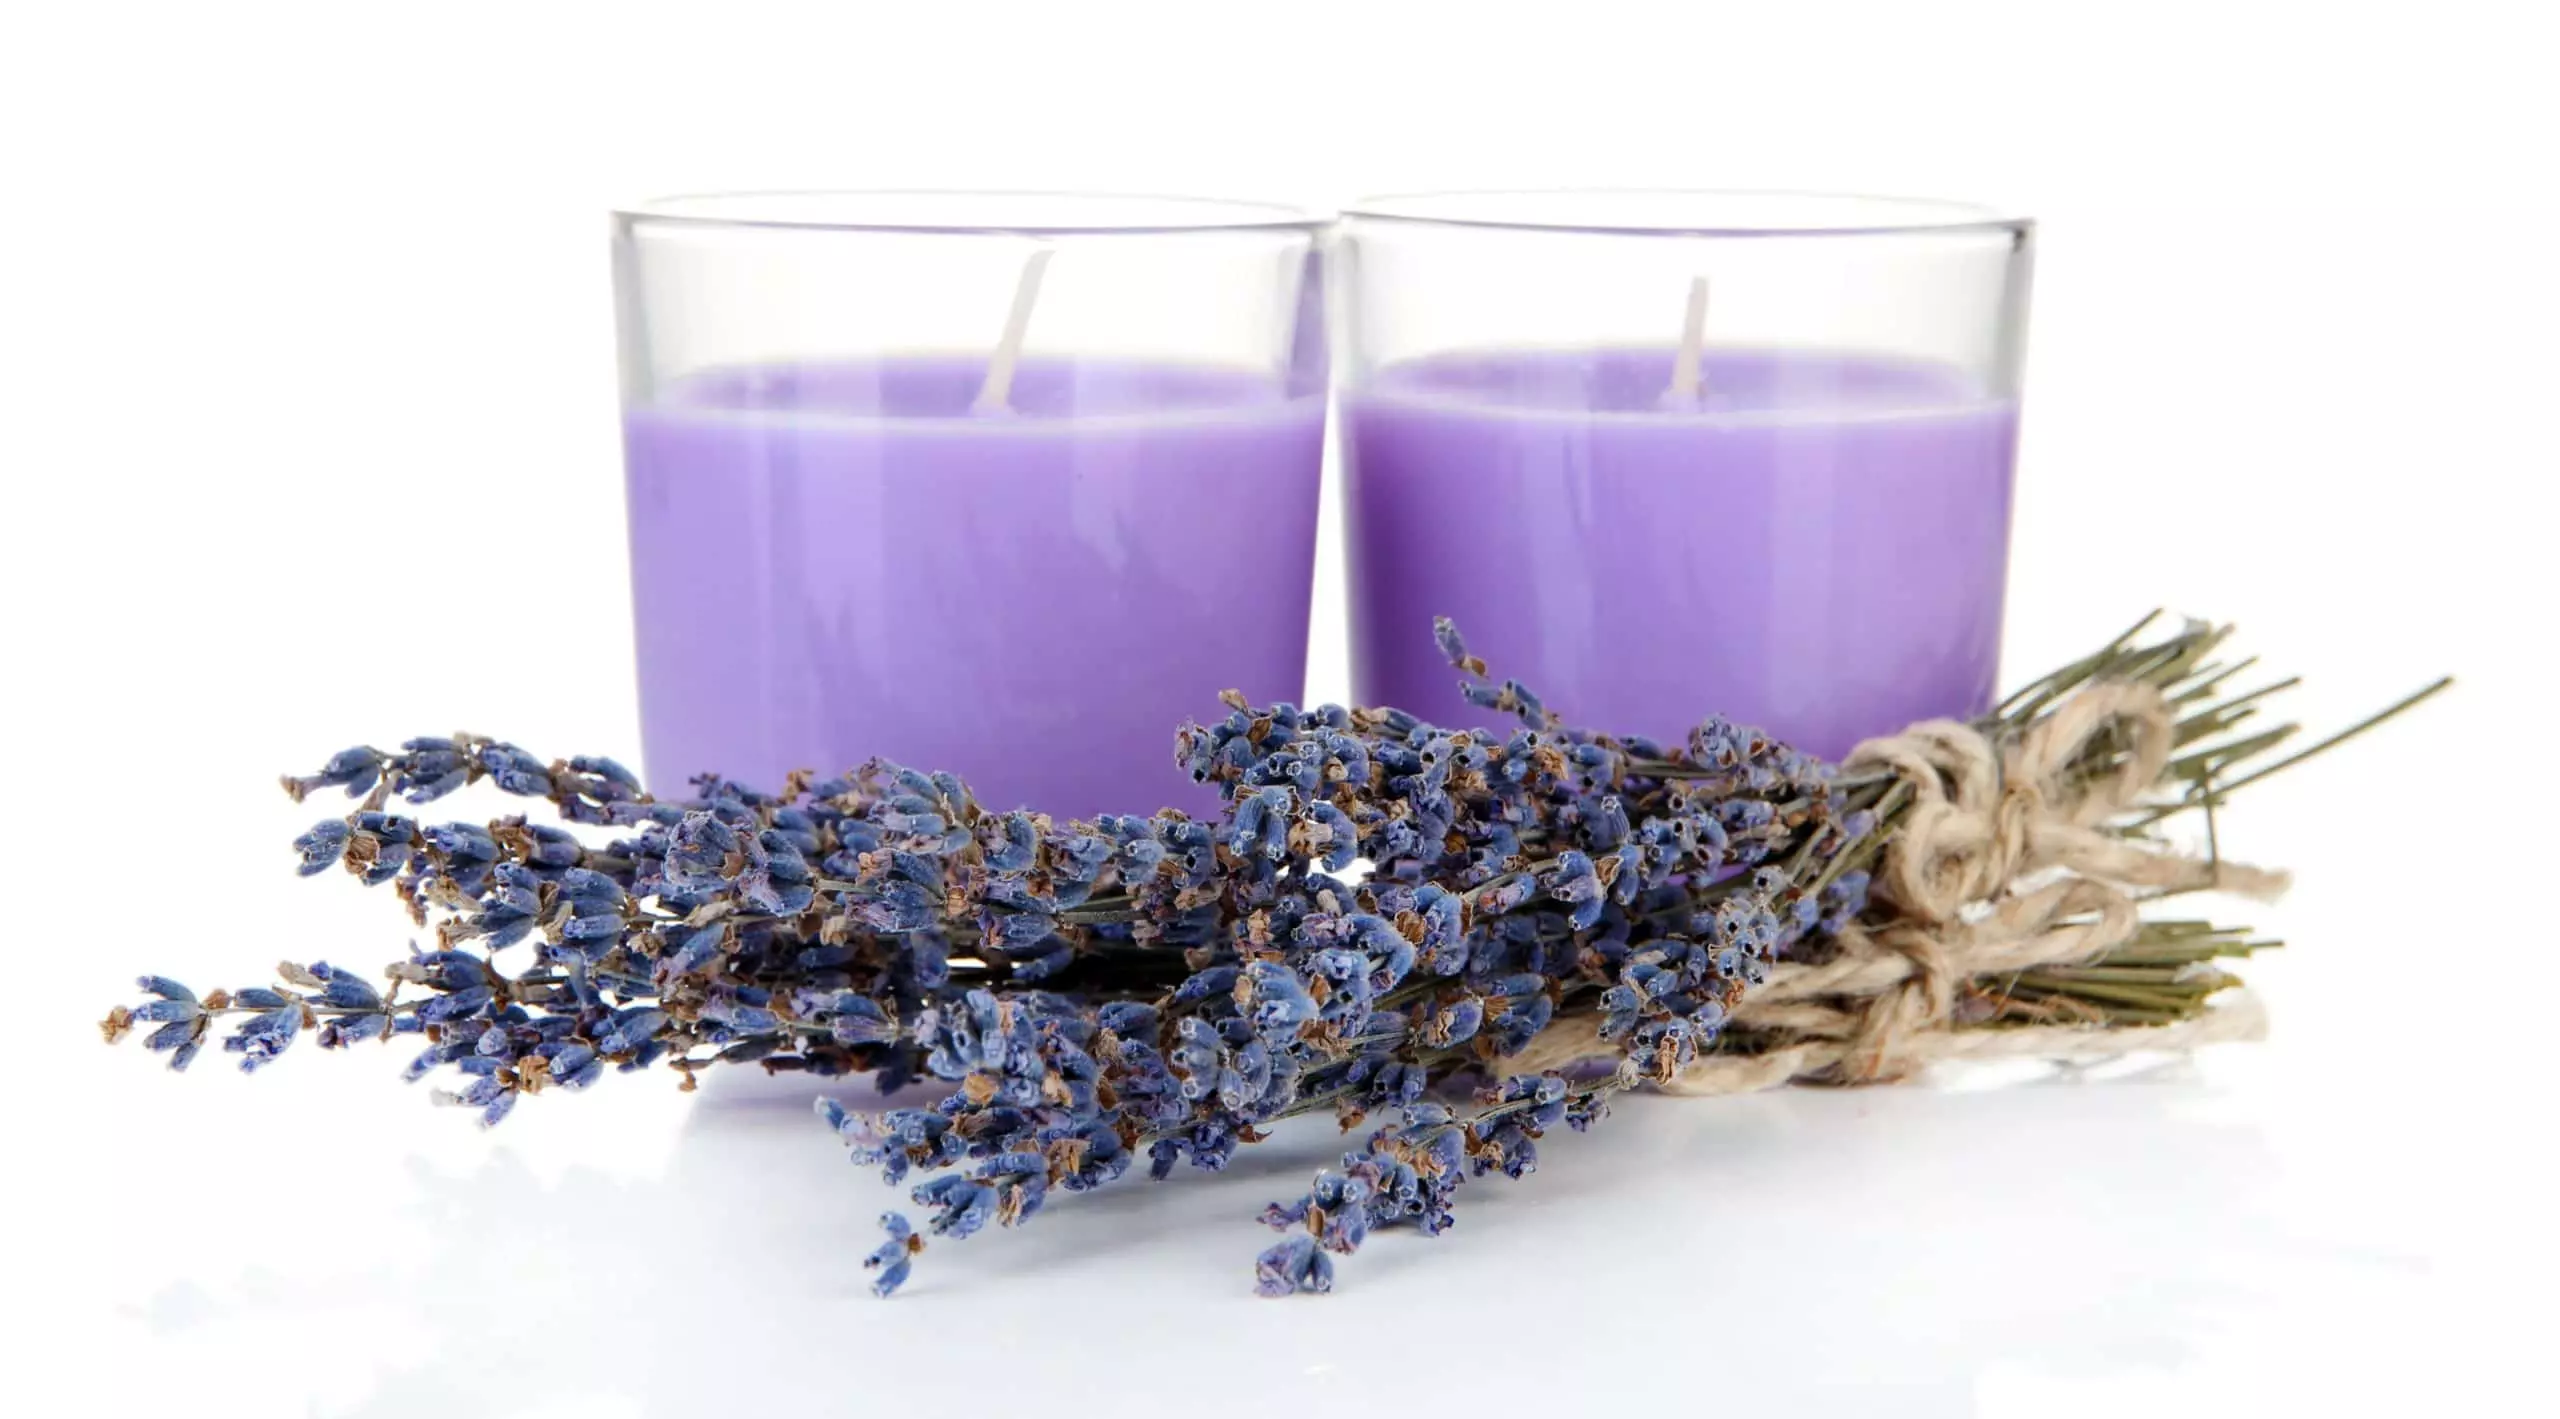 Lavender candles in front of fresh lavender